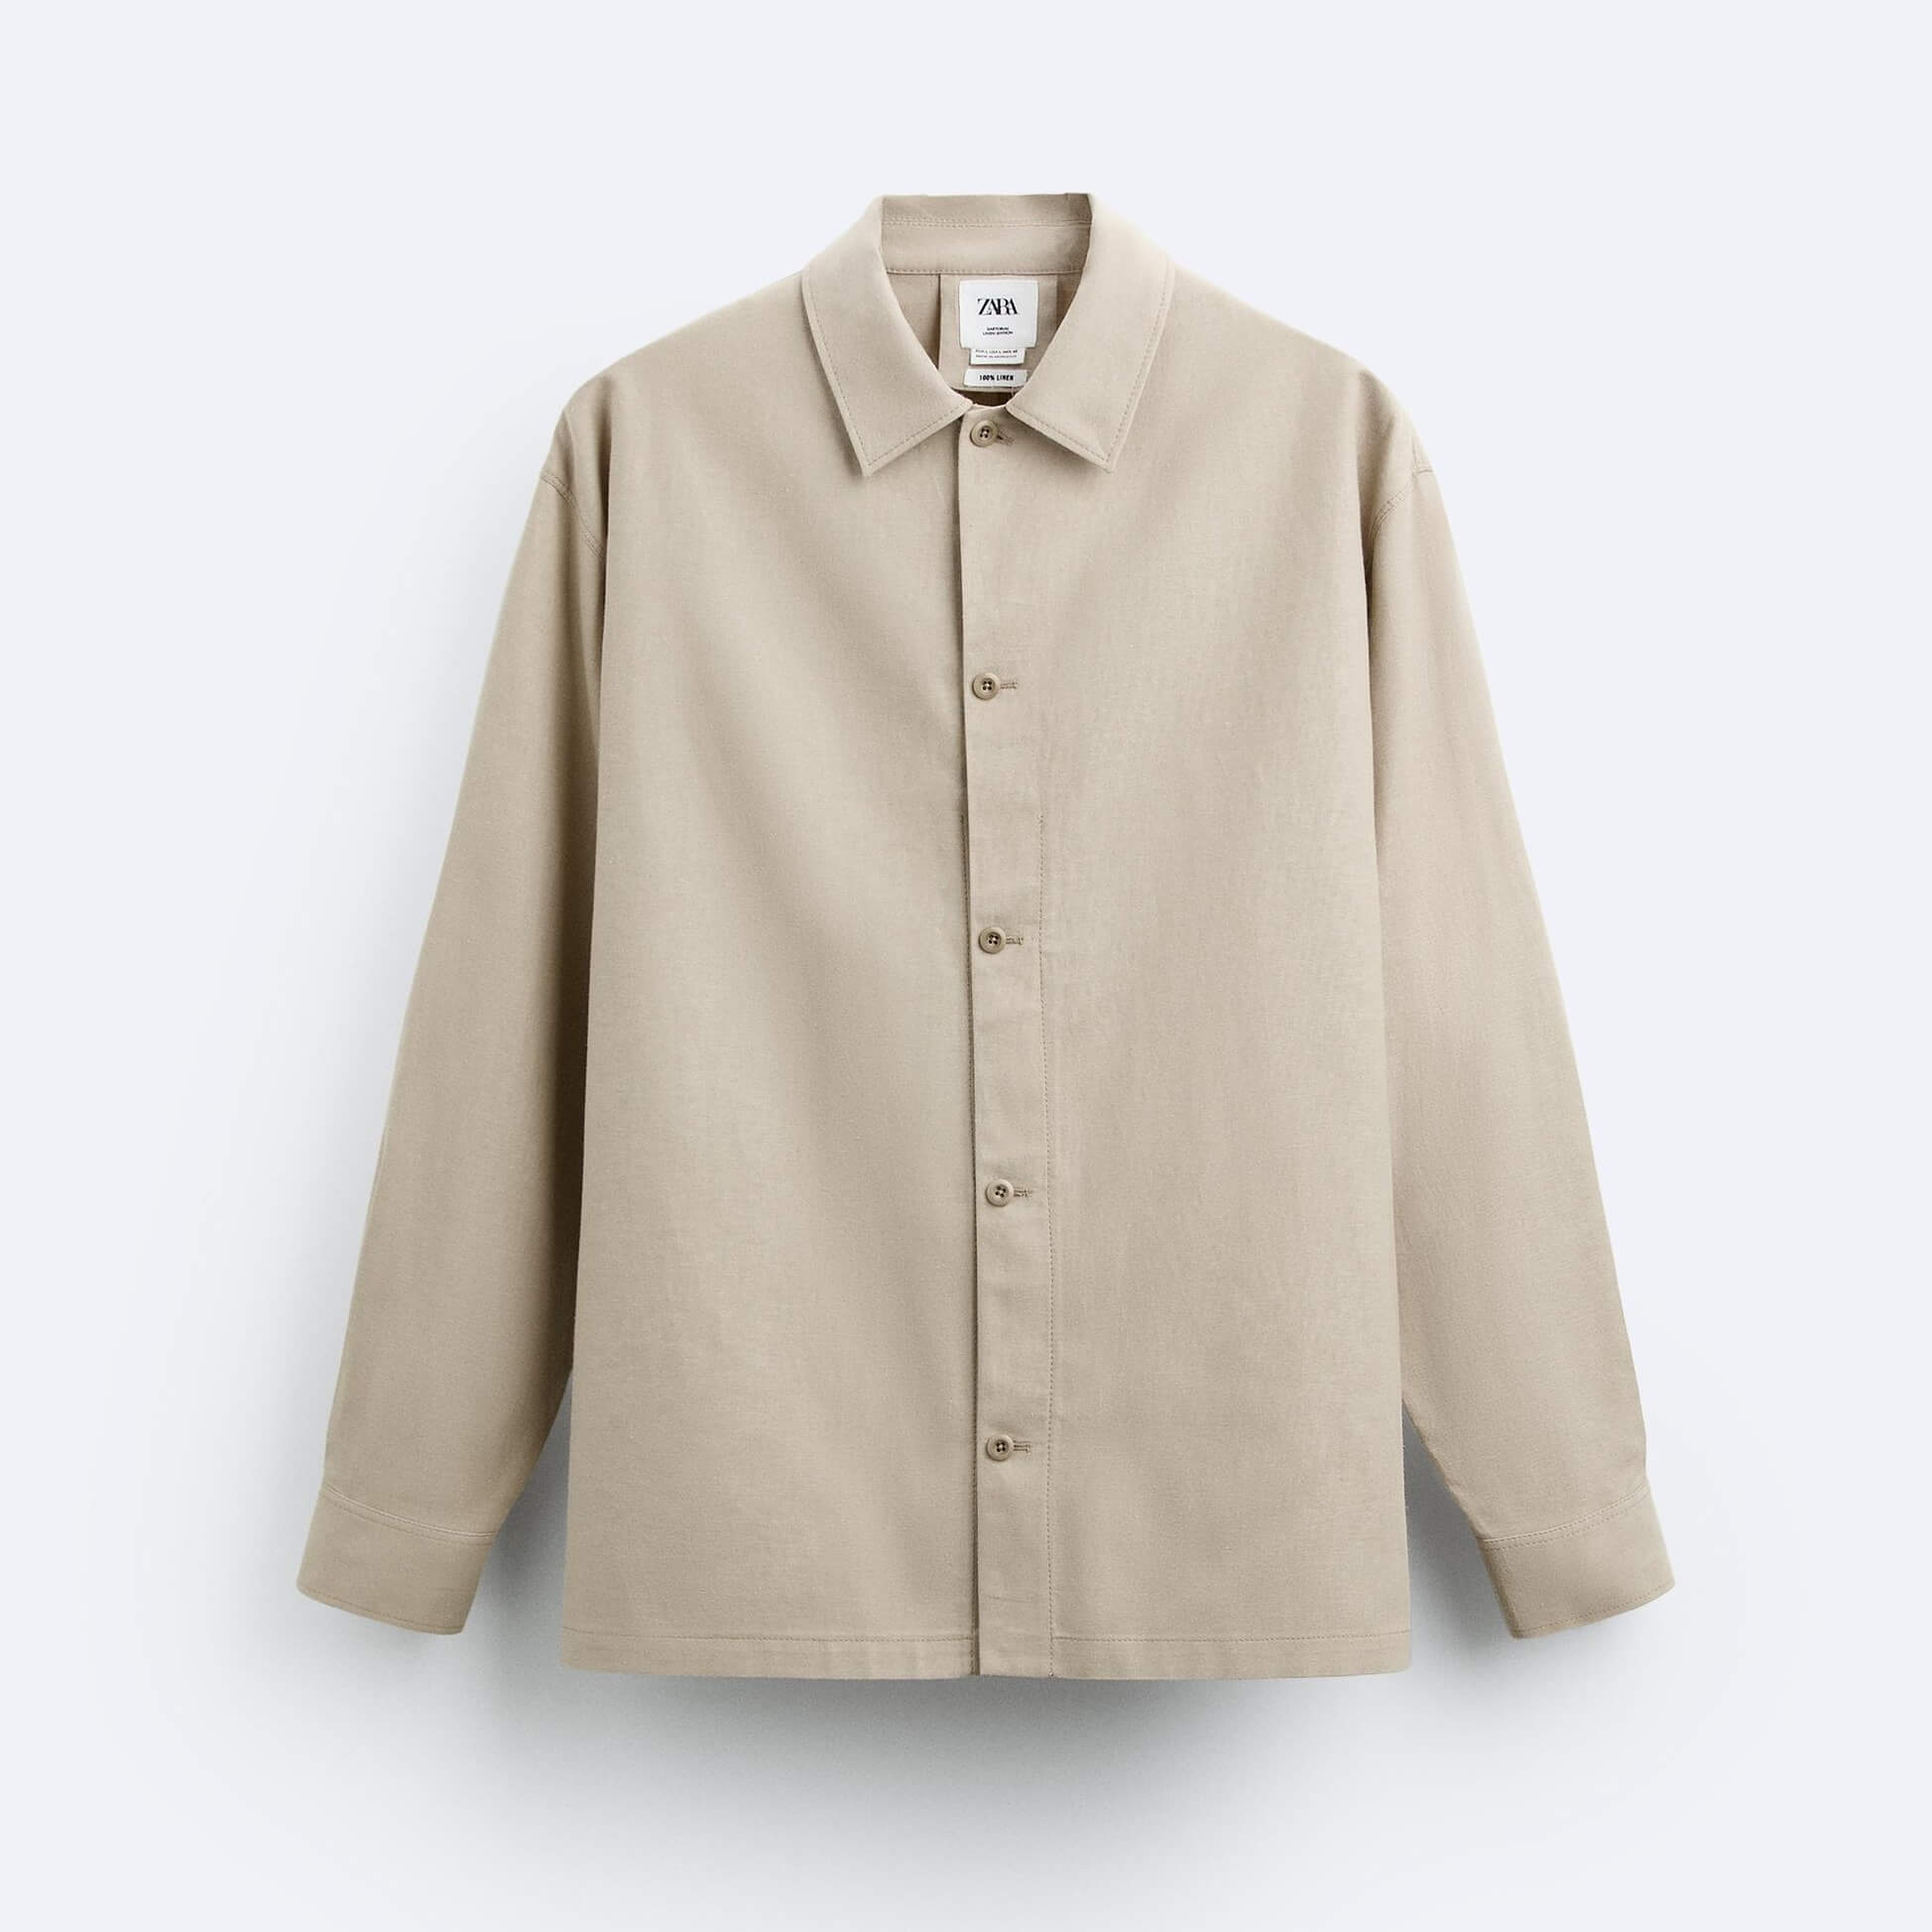 Рубашка верхняя Zara Cotton Linen, бежевый рубашка zara textured linen cotton зеленый